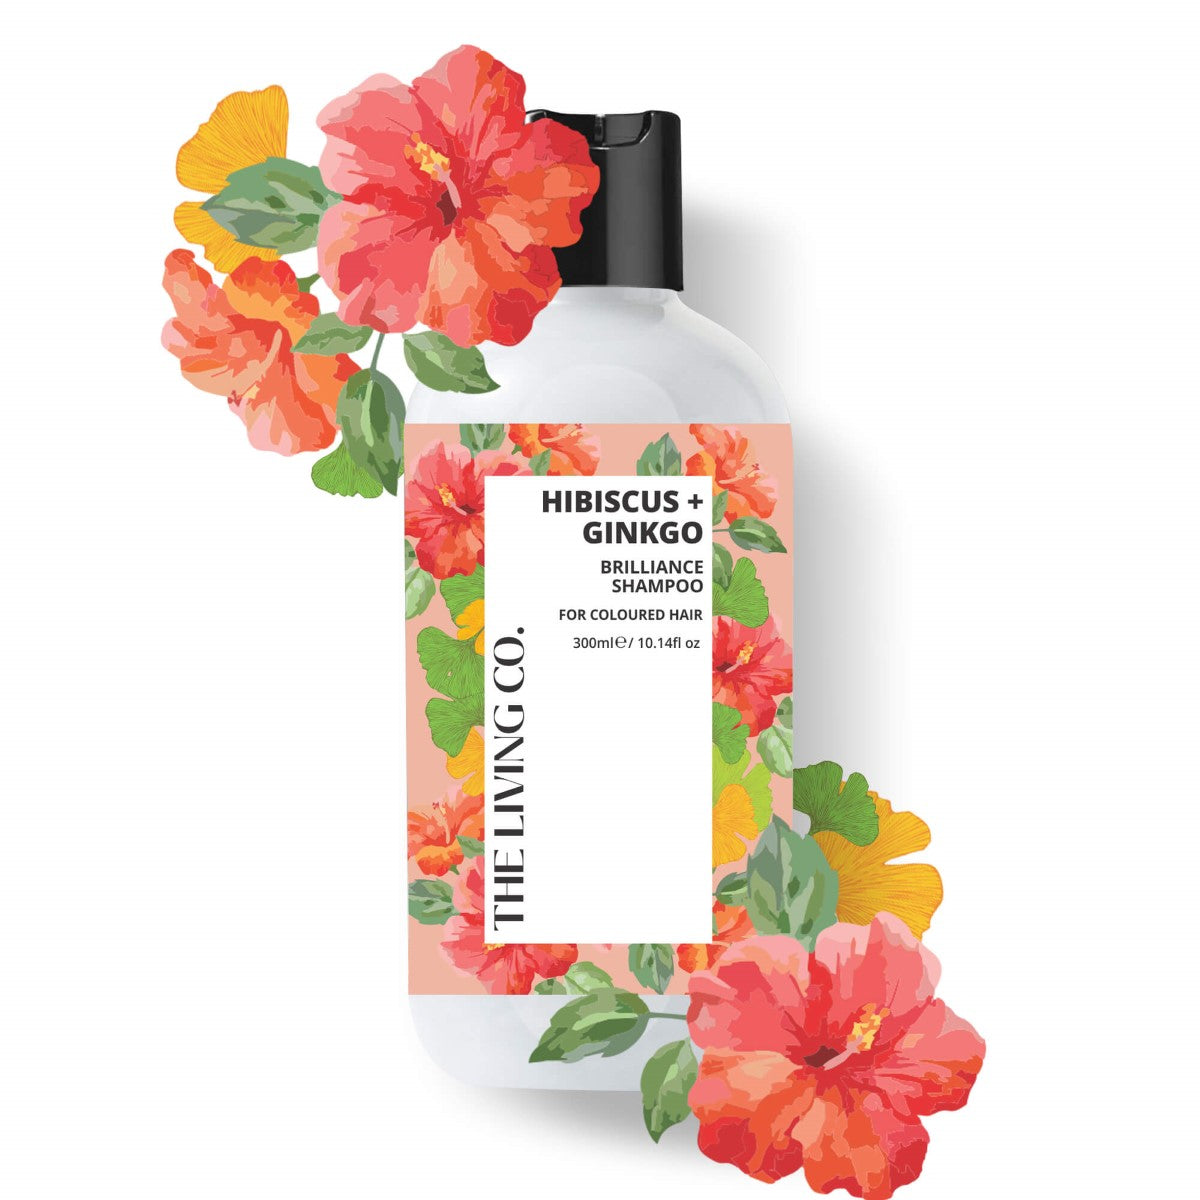 Brilliance Shampoo With Hibiscus + Ginkgo